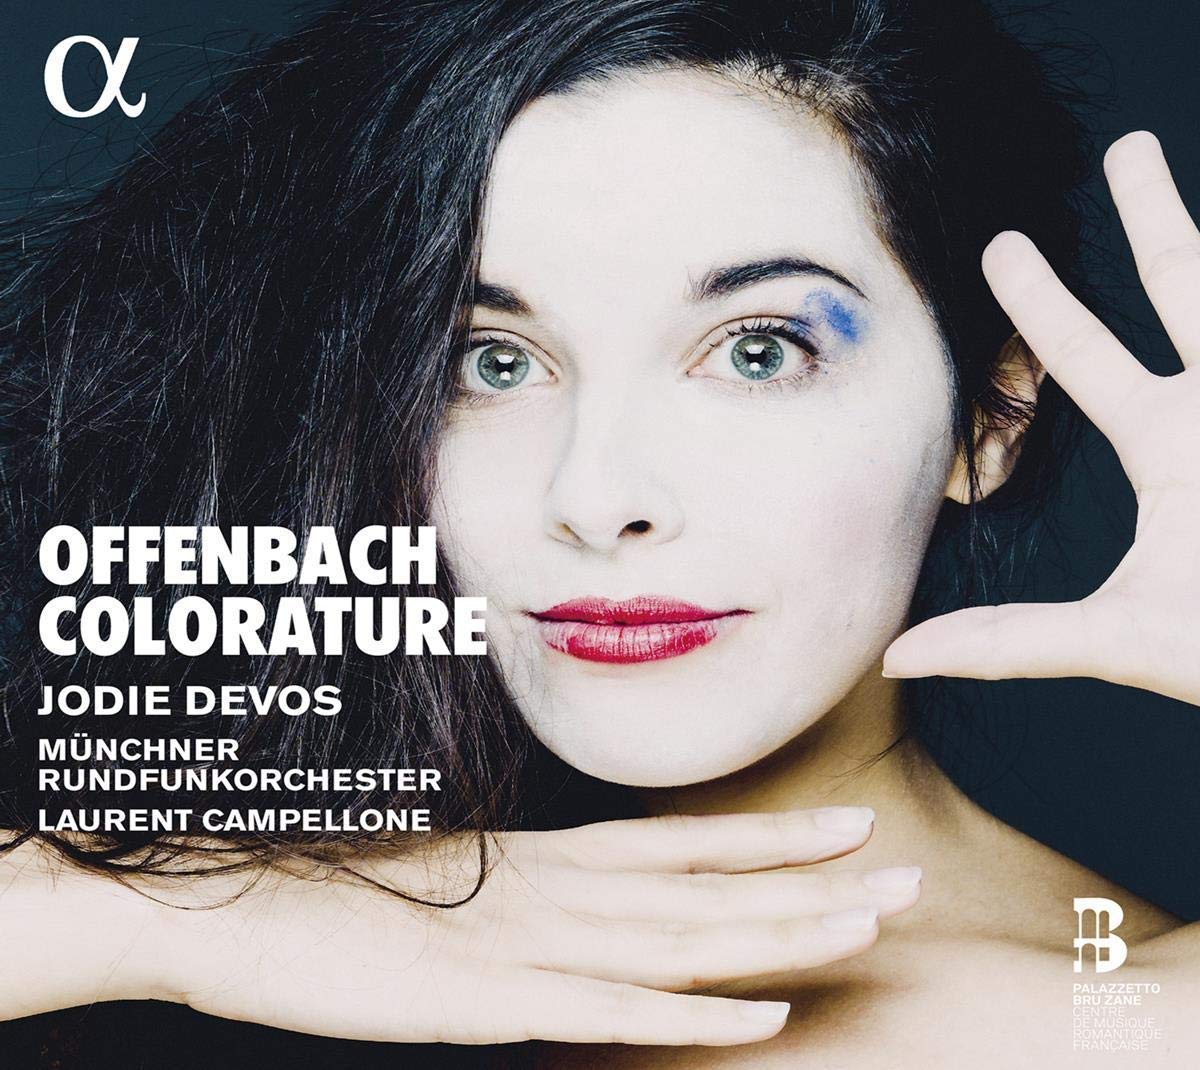 The solo album "Offenbach Colorature" featuring soprano Jodie Devos. (Photo: Alpha/Outthere Music)